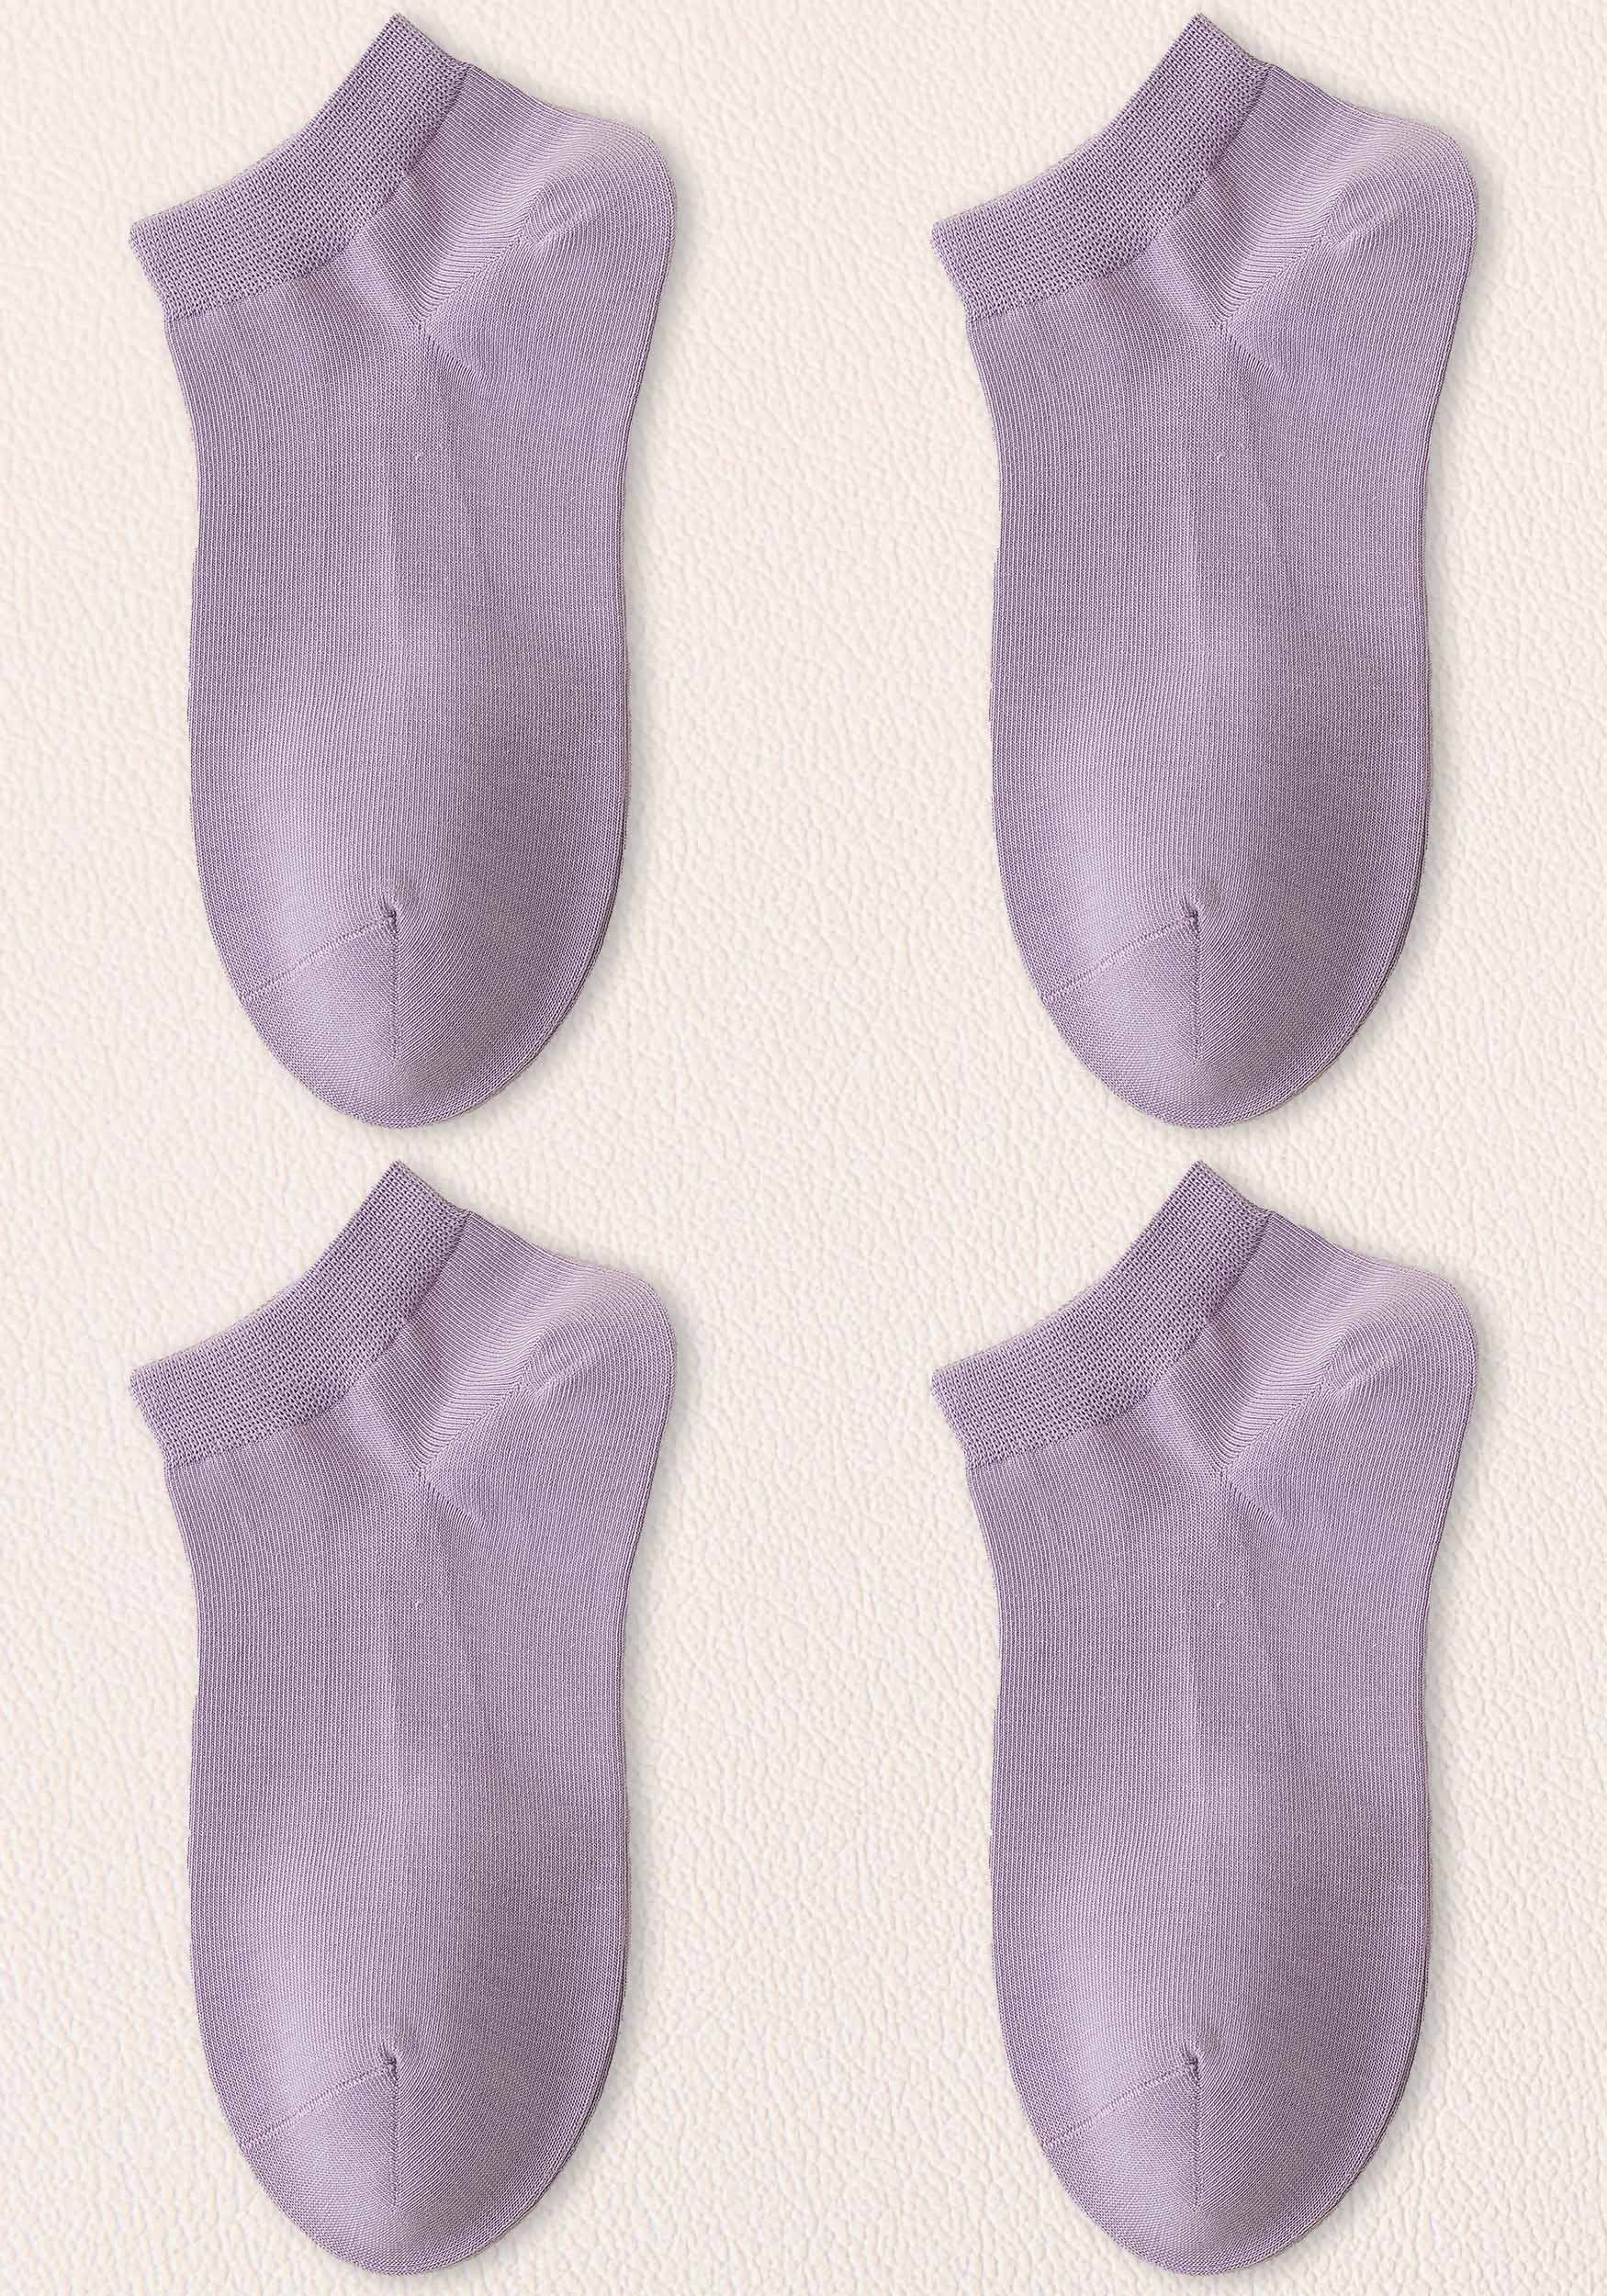 MAGICSHE Freizeitsocken Damen Socken– warm, atmungsaktiv,lange haltbar, kein Verrutschen (4-Paar) Invisible Socken bequem Sneakersocken Lila